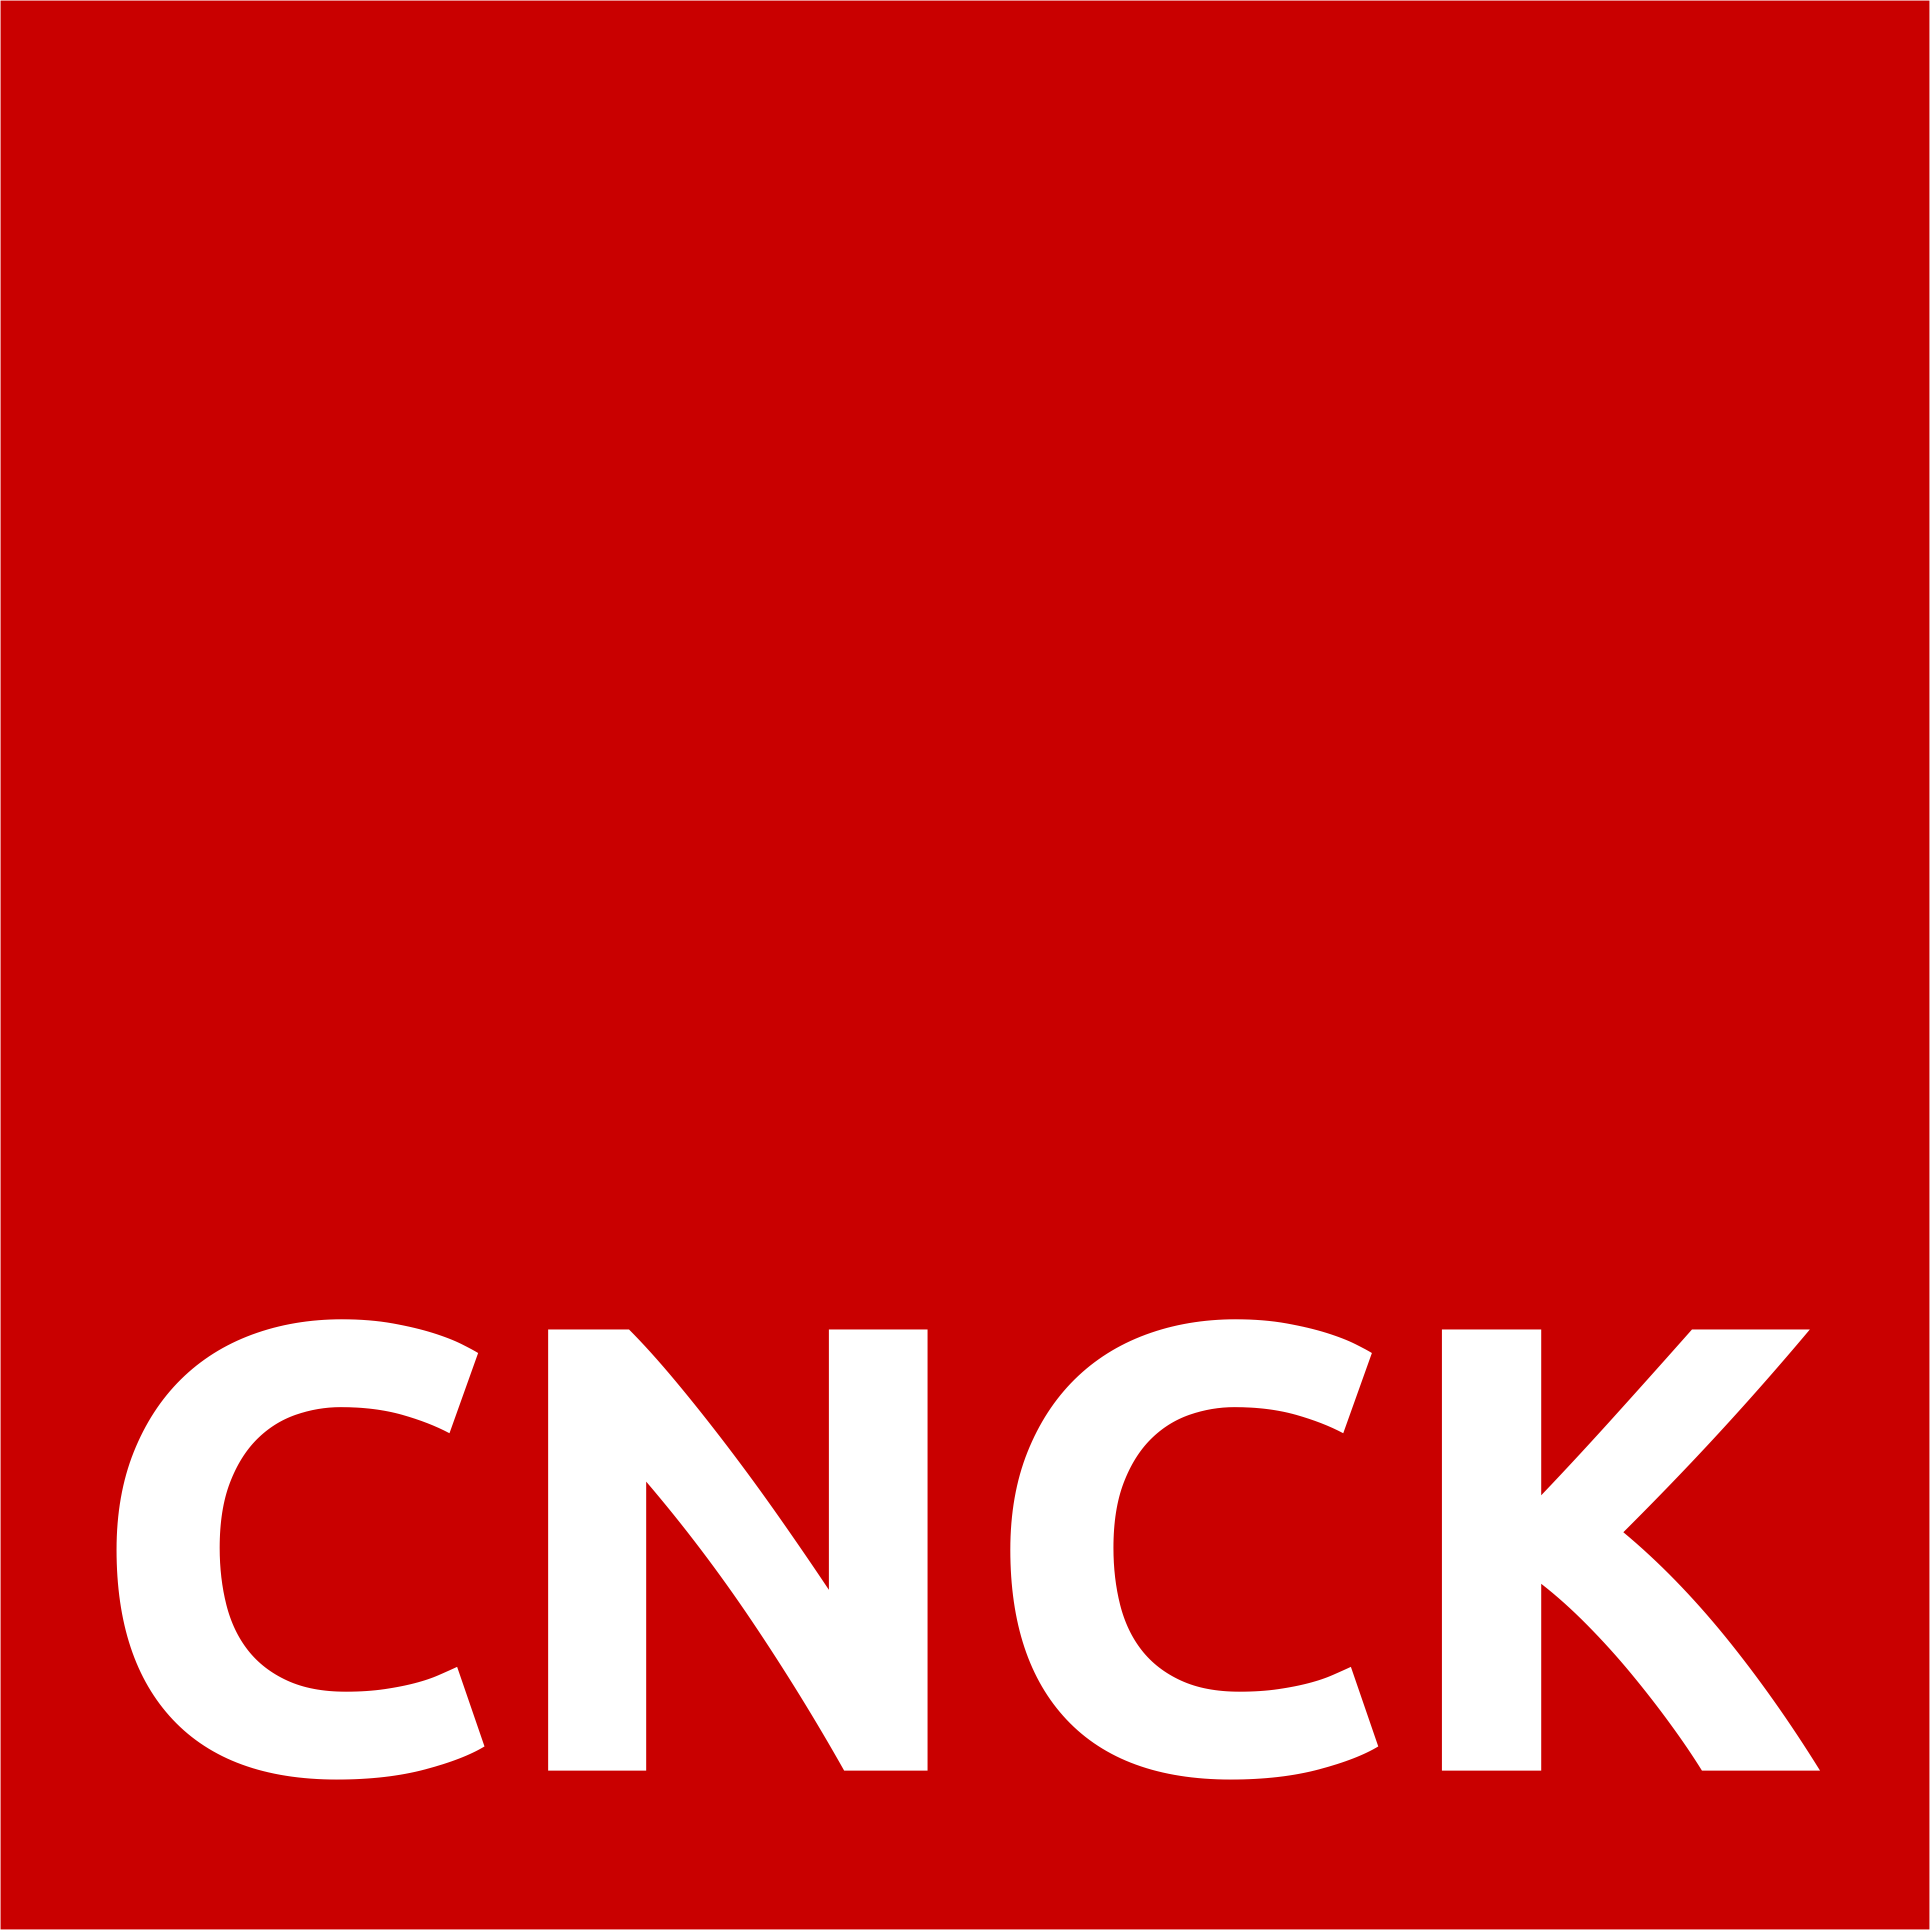 CNCK IT support provider